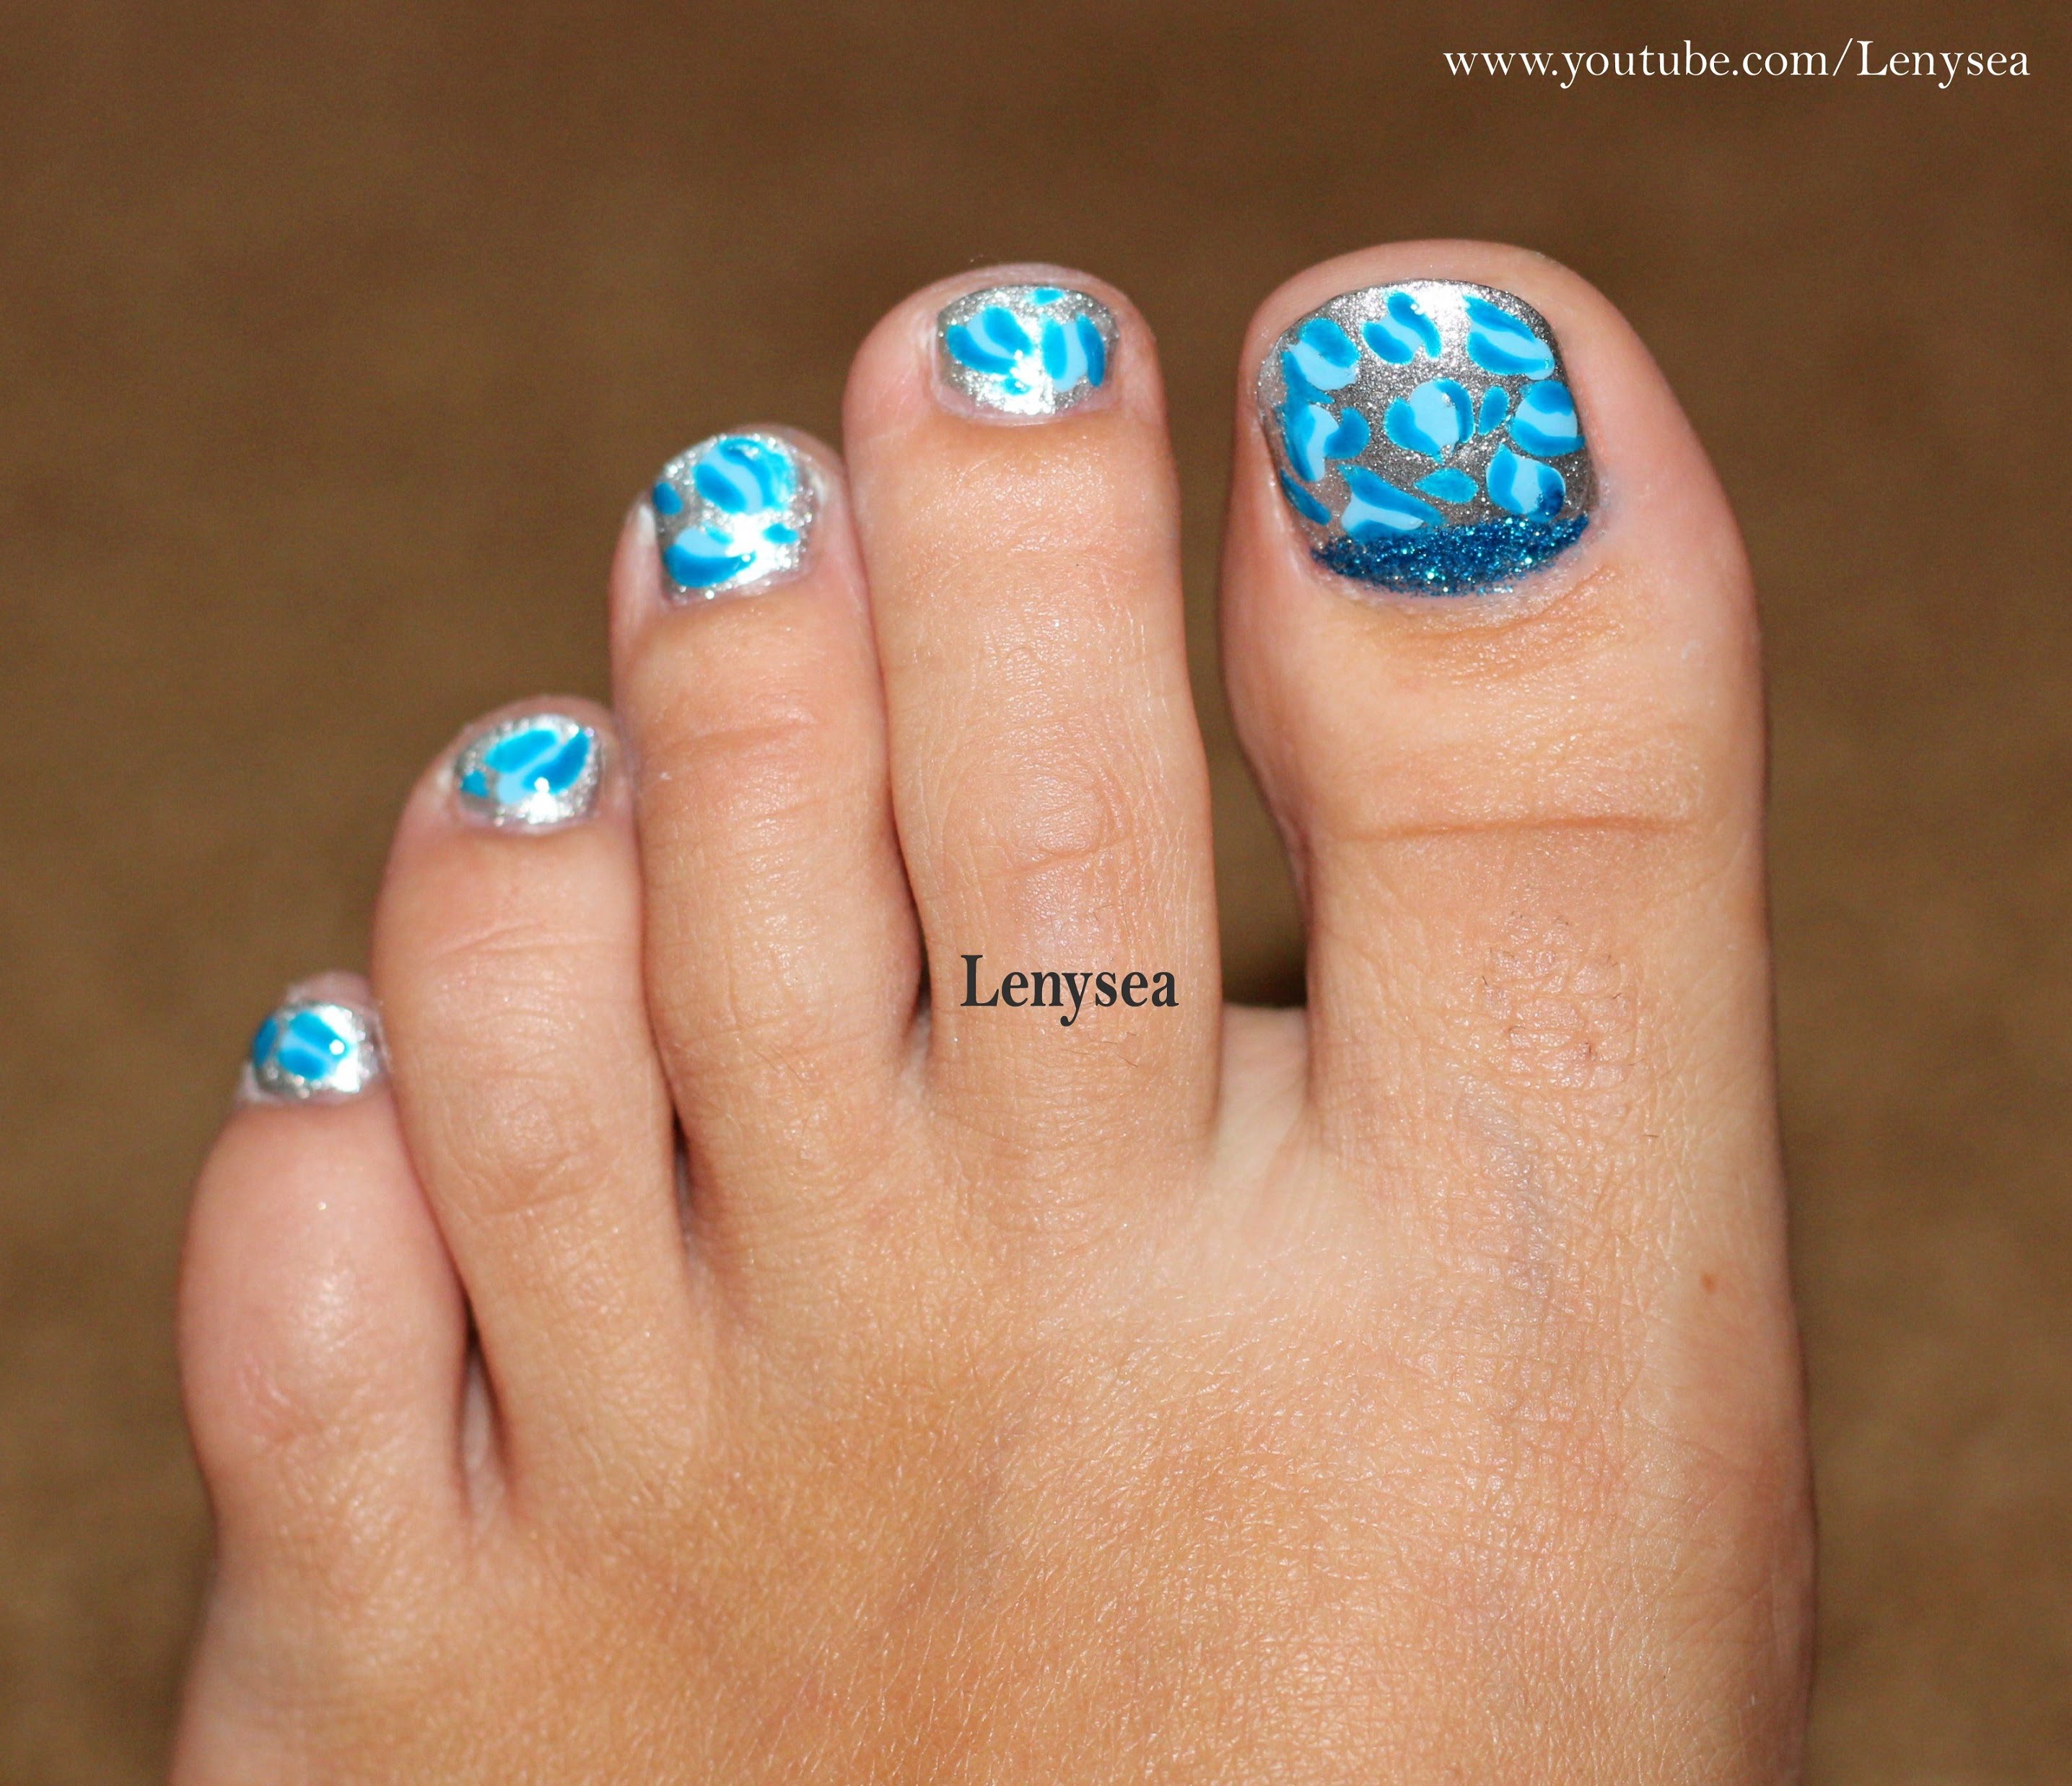 Silver Toe Nail Designs